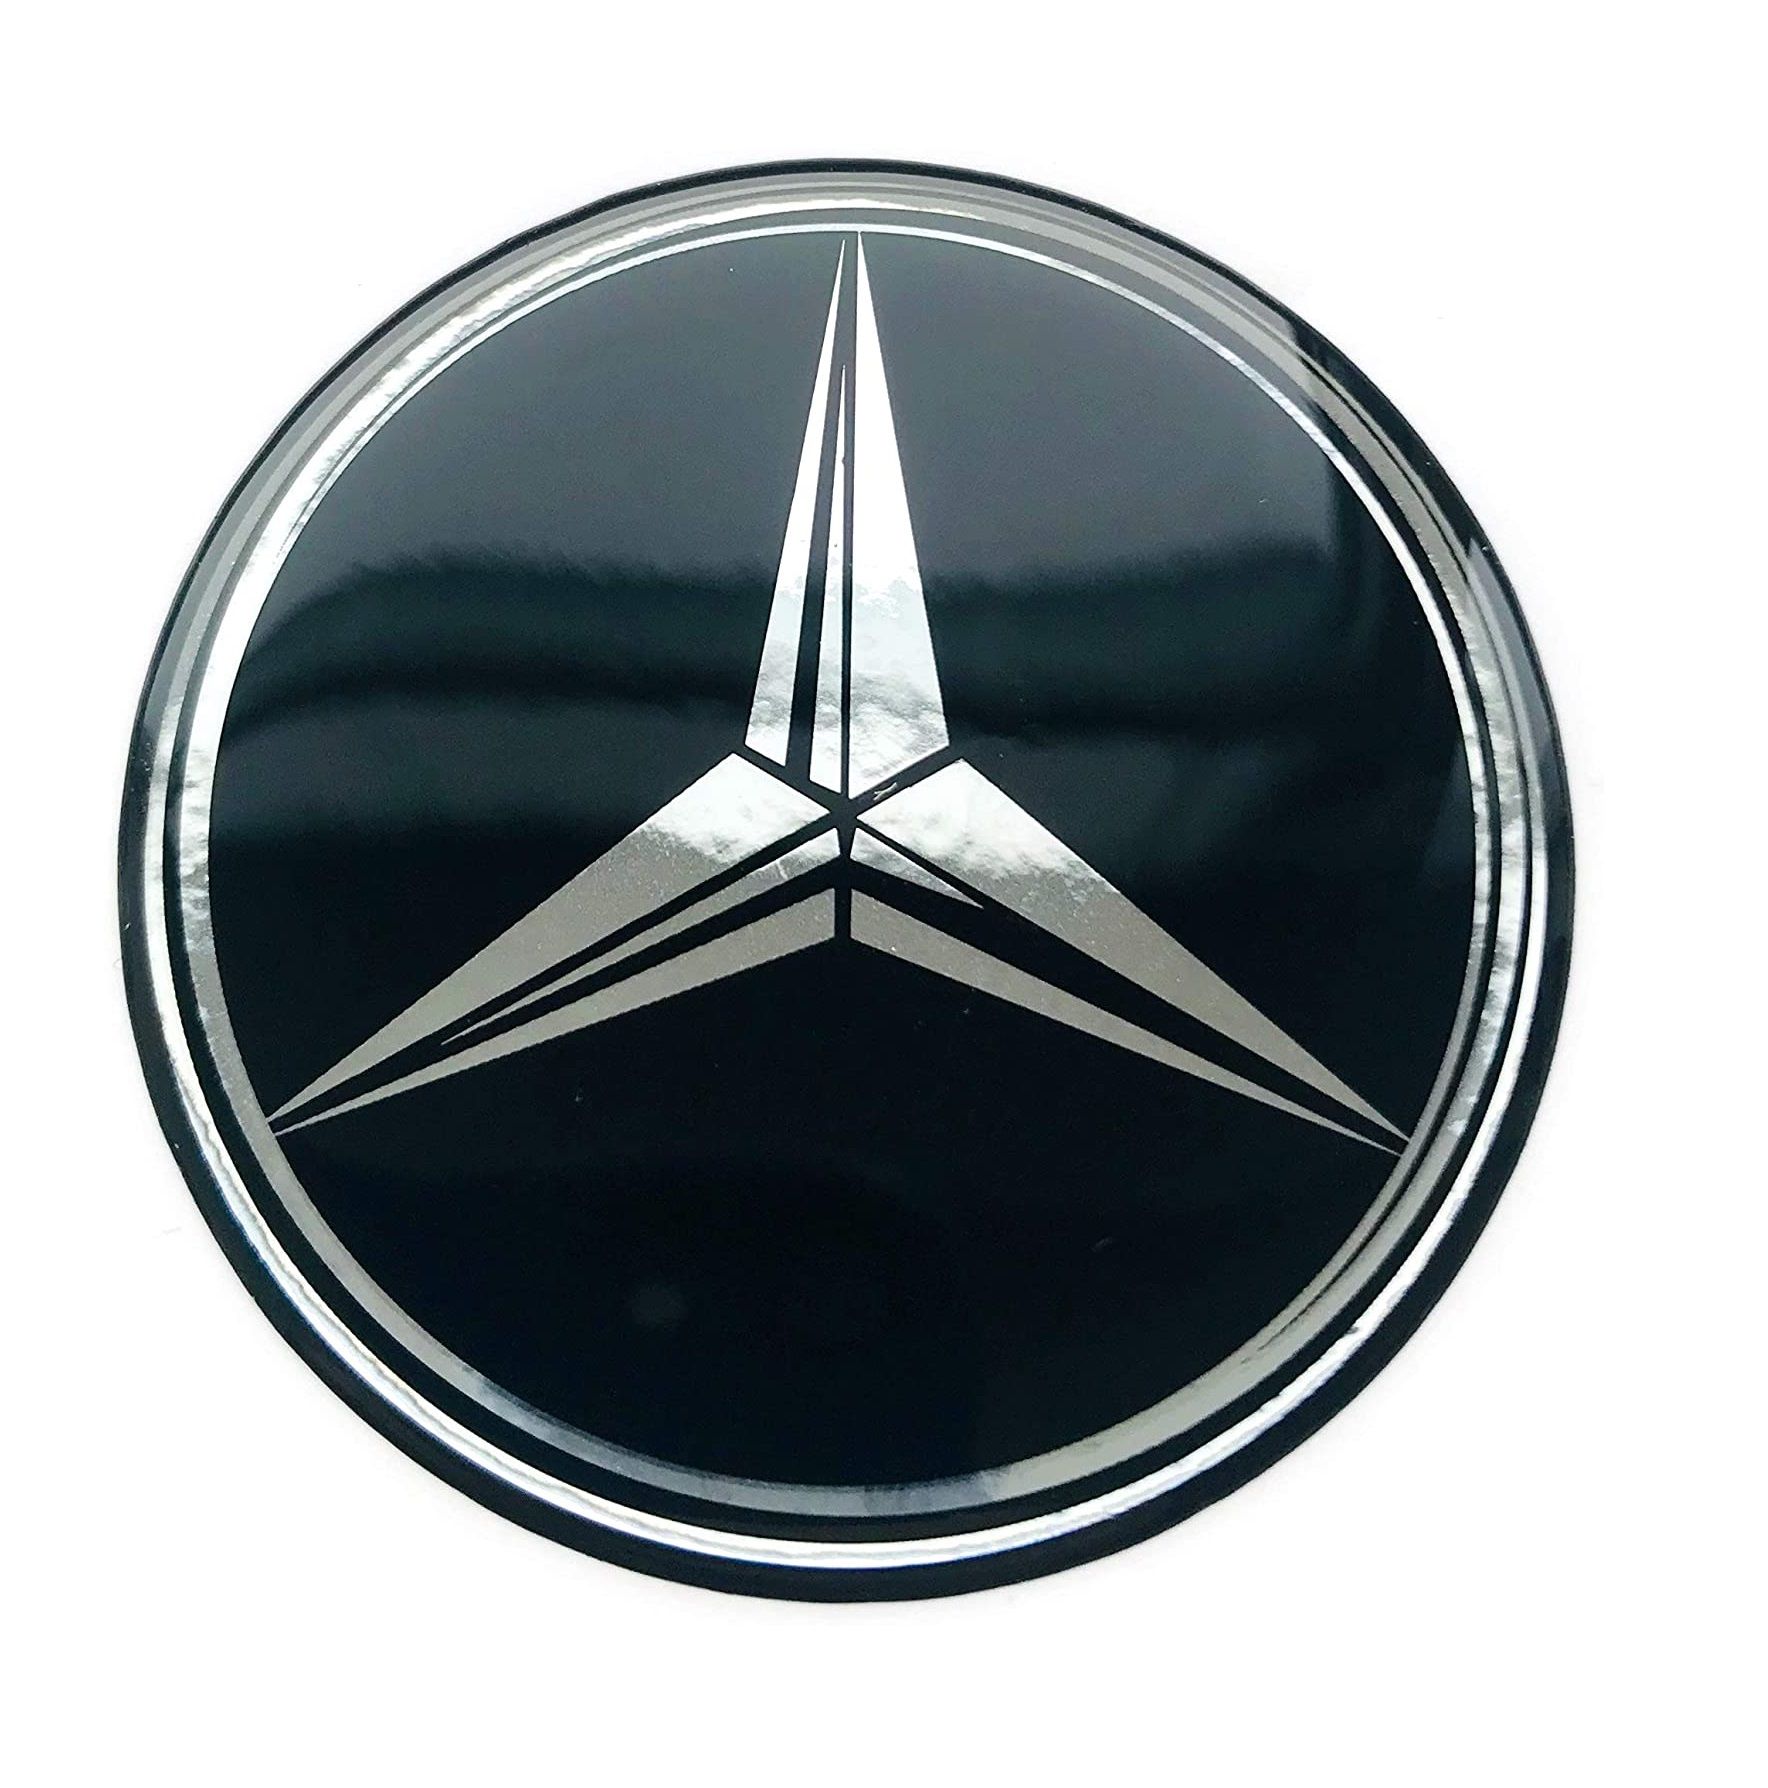 64mm SILIKON embleme MERCEDES BENZ rad mitte aufkleber Radkappen logo